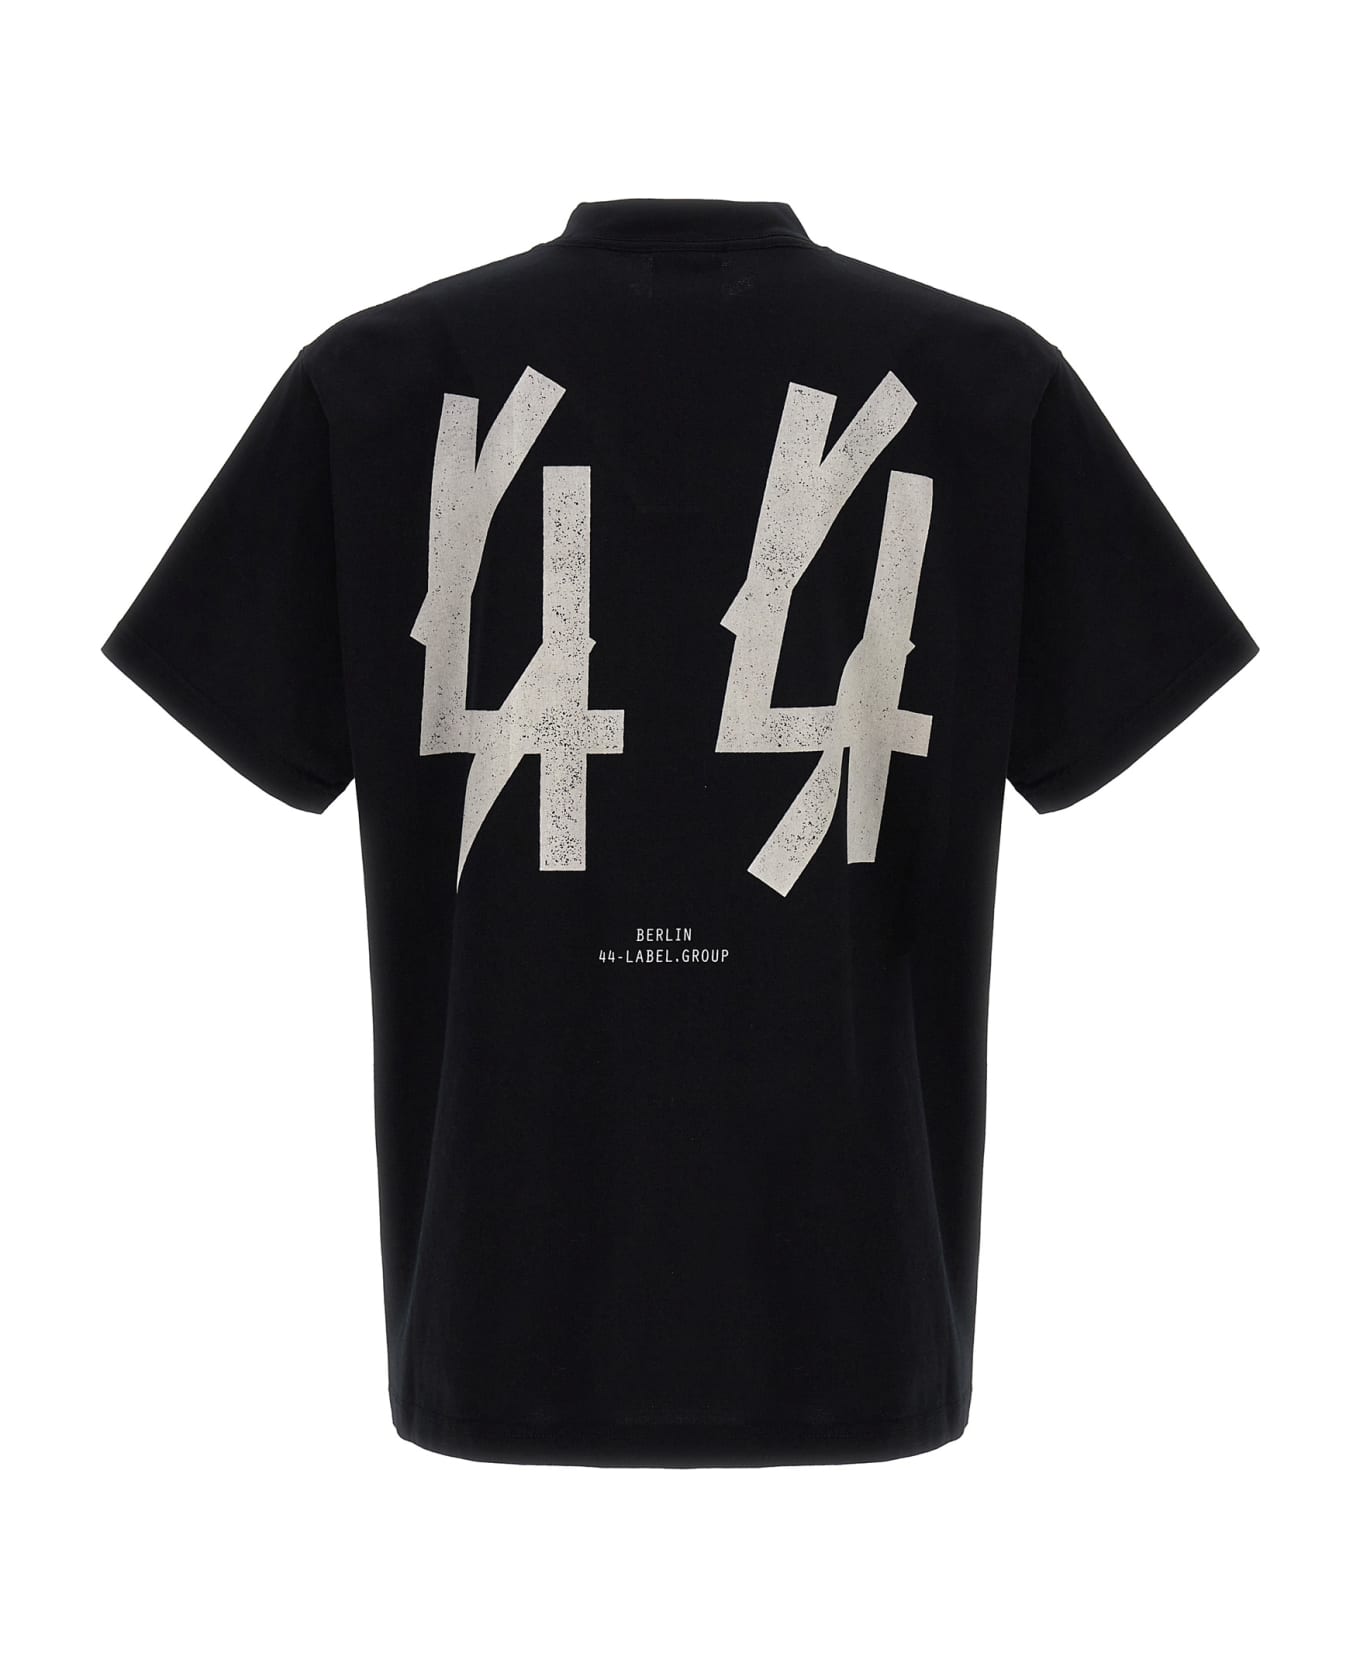 44 Label Group T-shirt Guestlist/berlin Sub' T-Shirt - BLACK